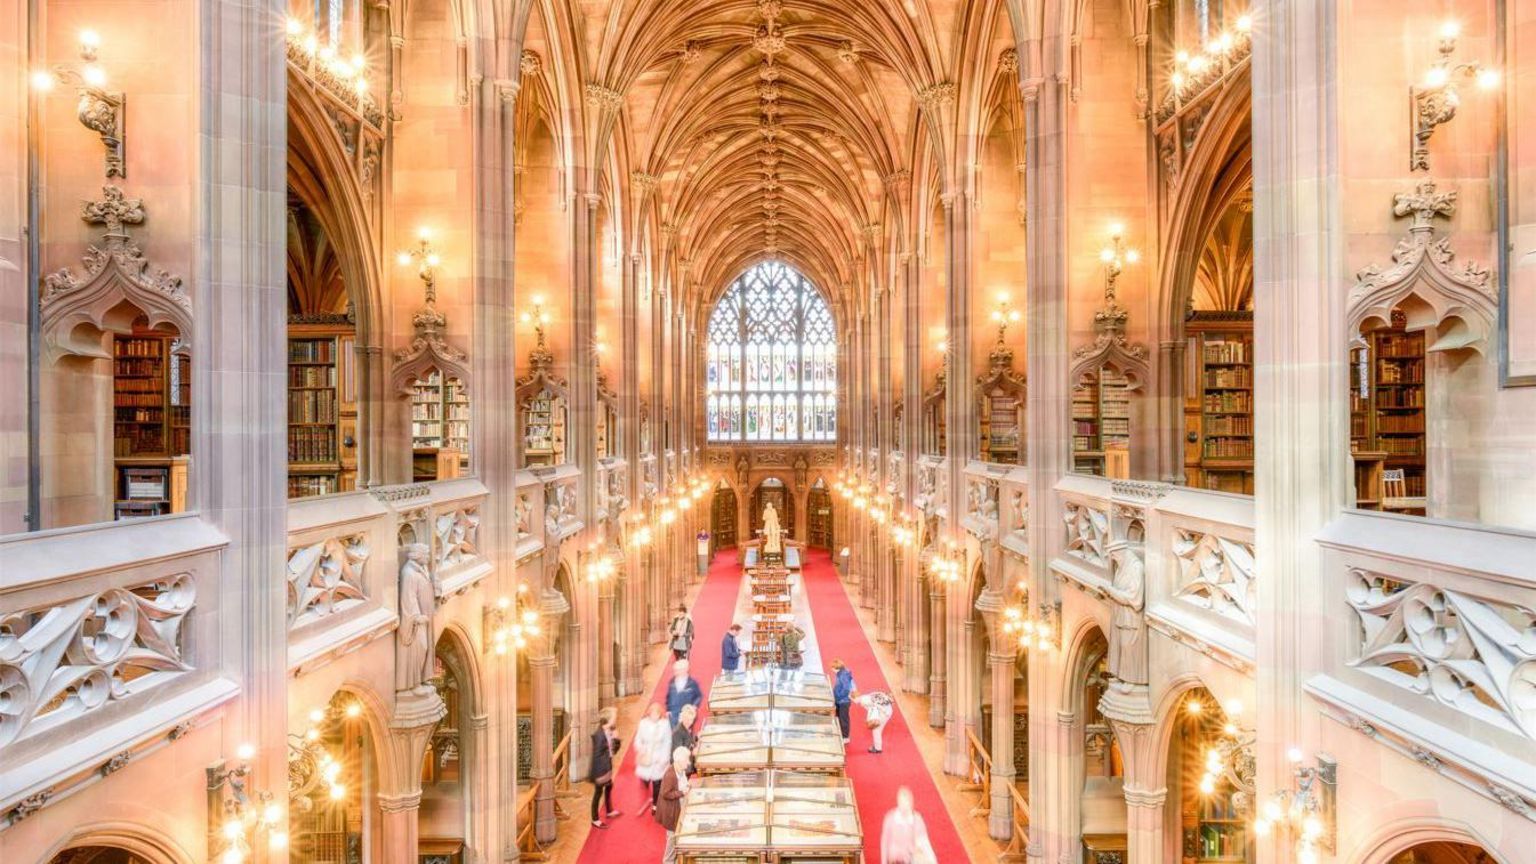 Interior shot of John Rylands Library in Manchester